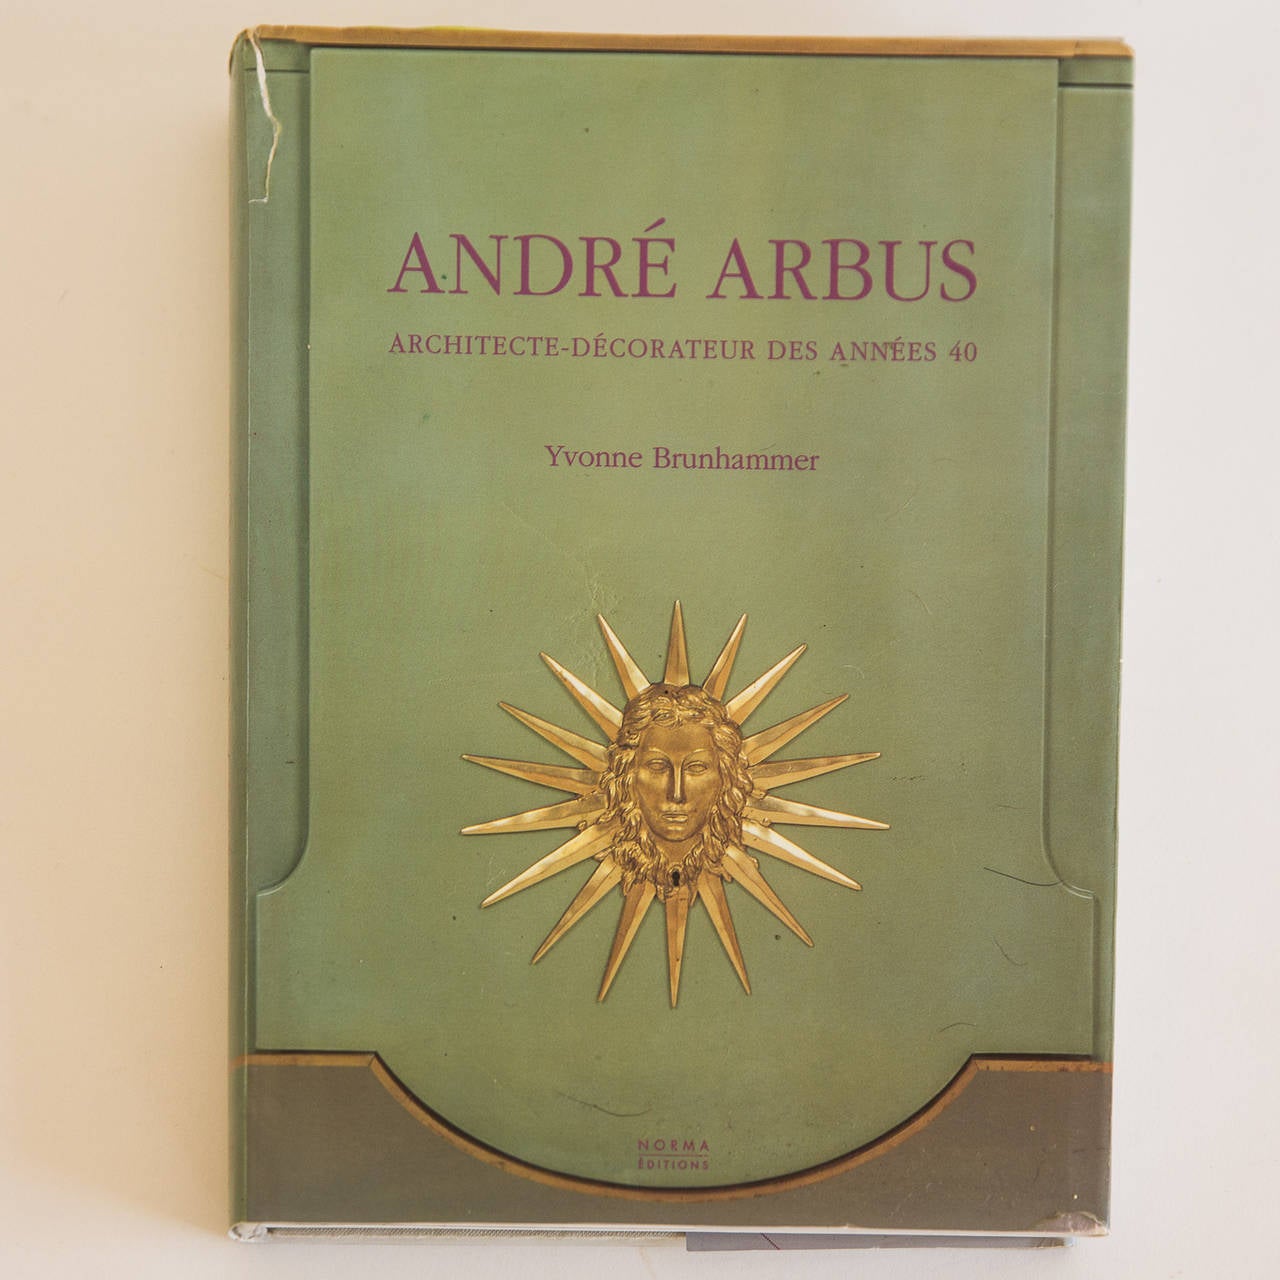  Andre Arbus & Androusov Pair of Sconces 1